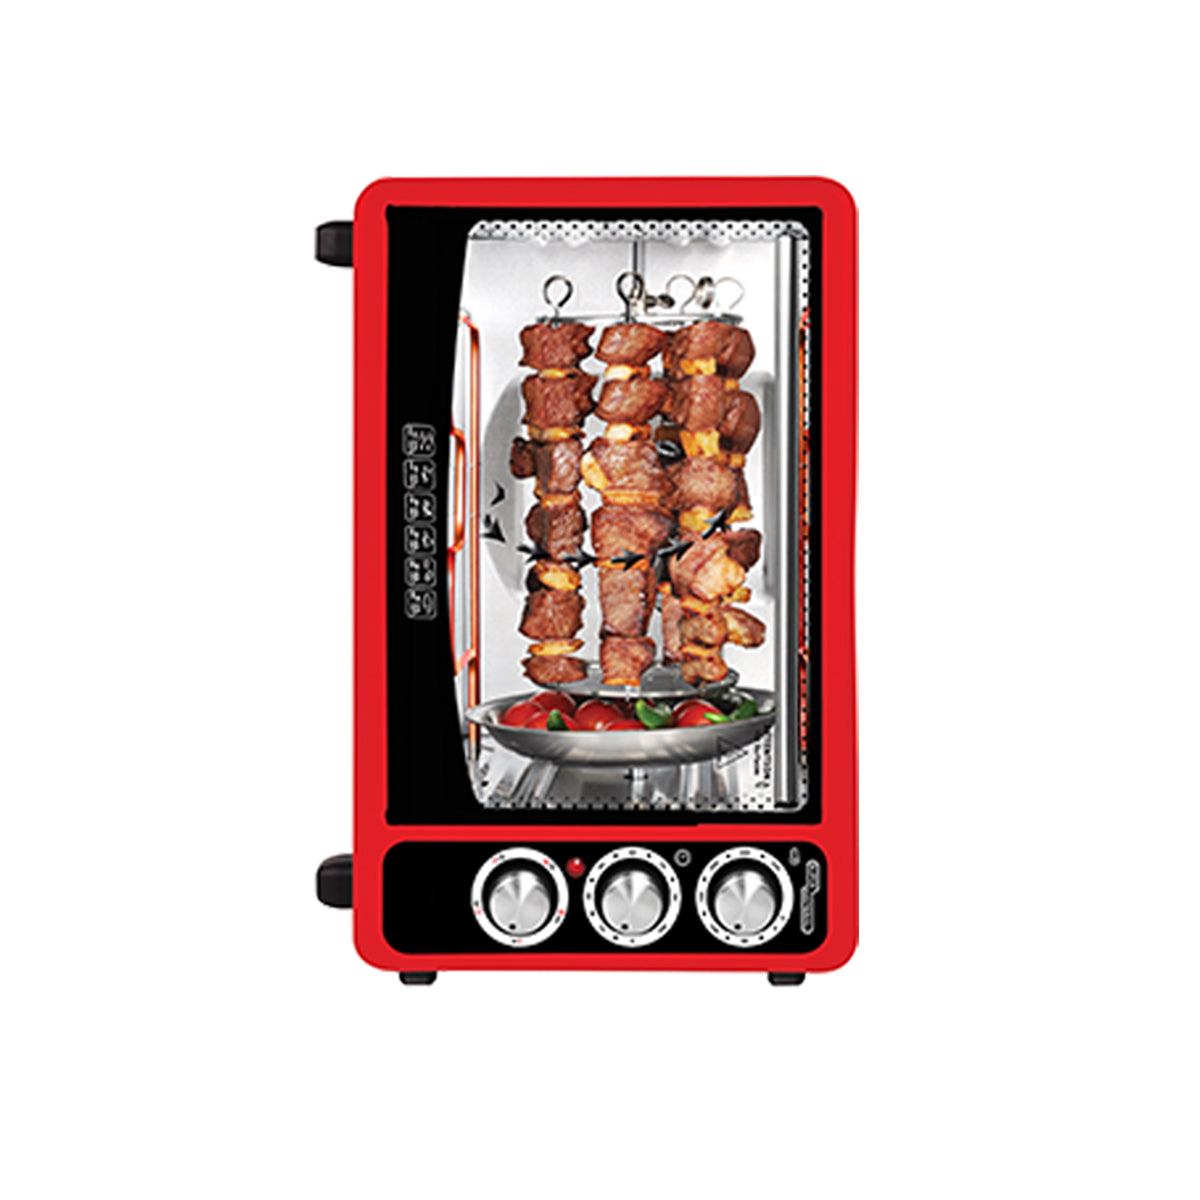 Super General Electric Oven and Kebab Maker 40L